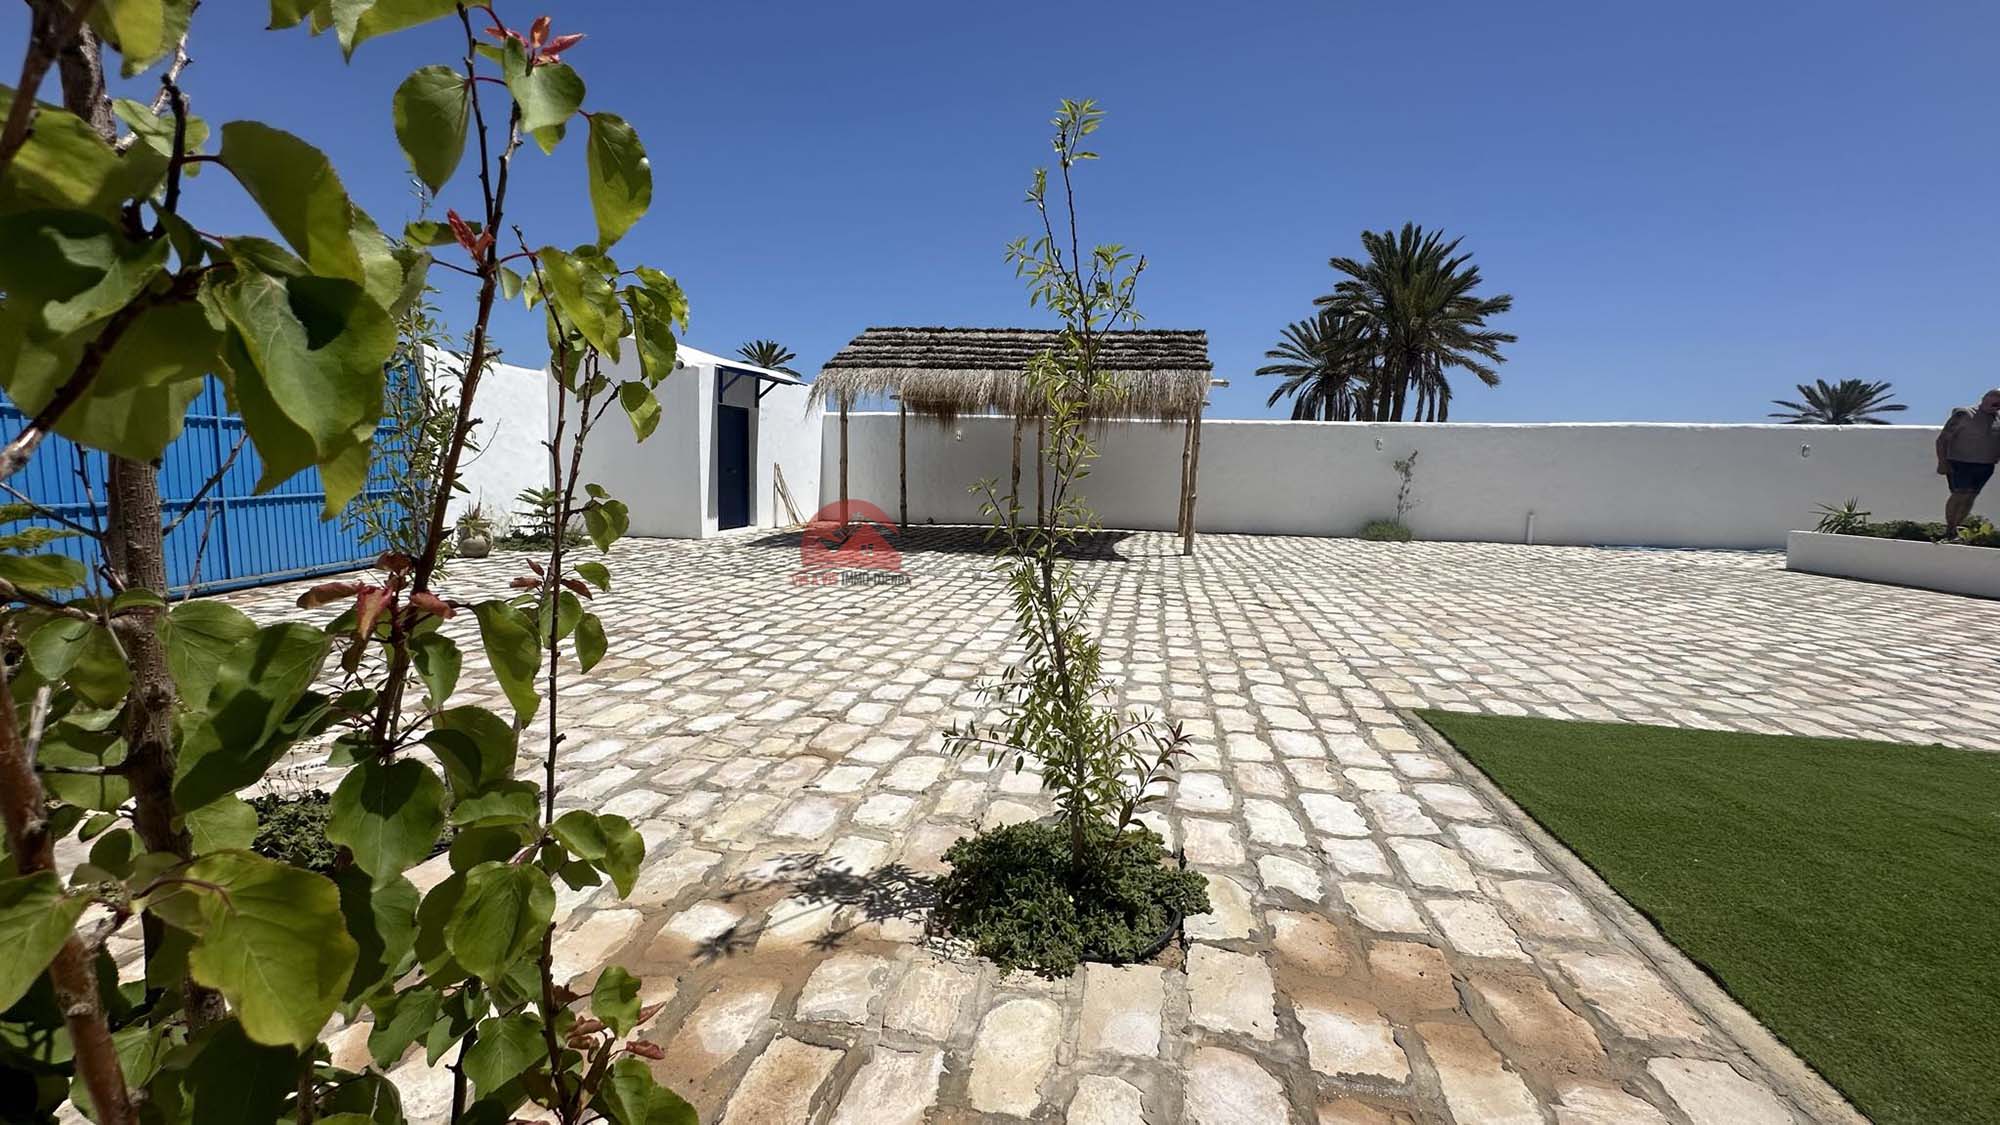 Djerba - Midoun El May Location Maisons Villa avec piscine a el may djerba ref l746